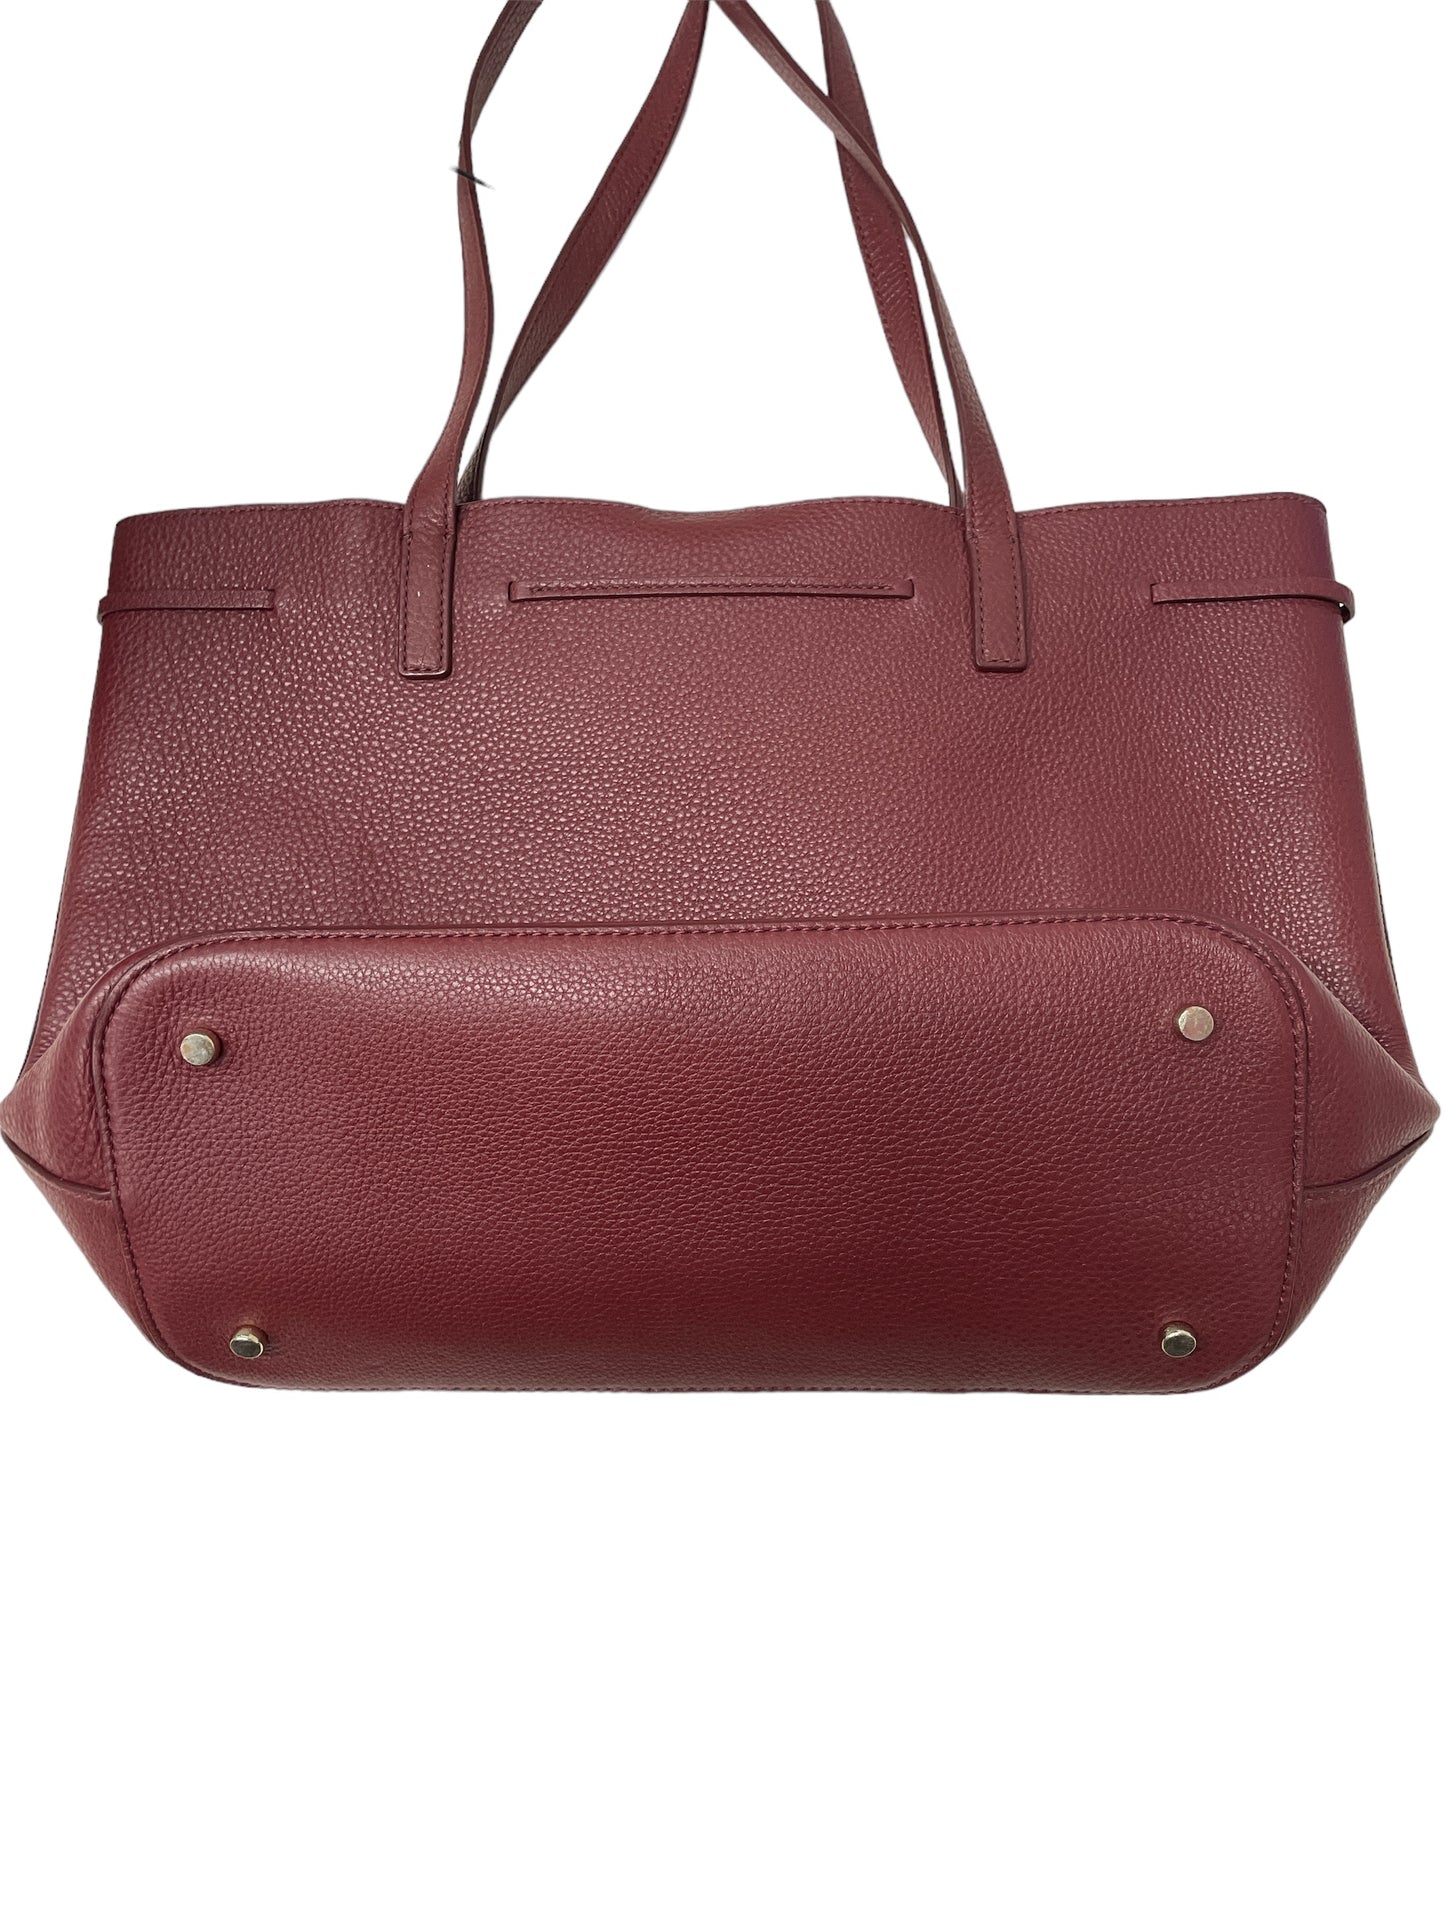 Handbag Designer By Kate Spade  Size: Medium